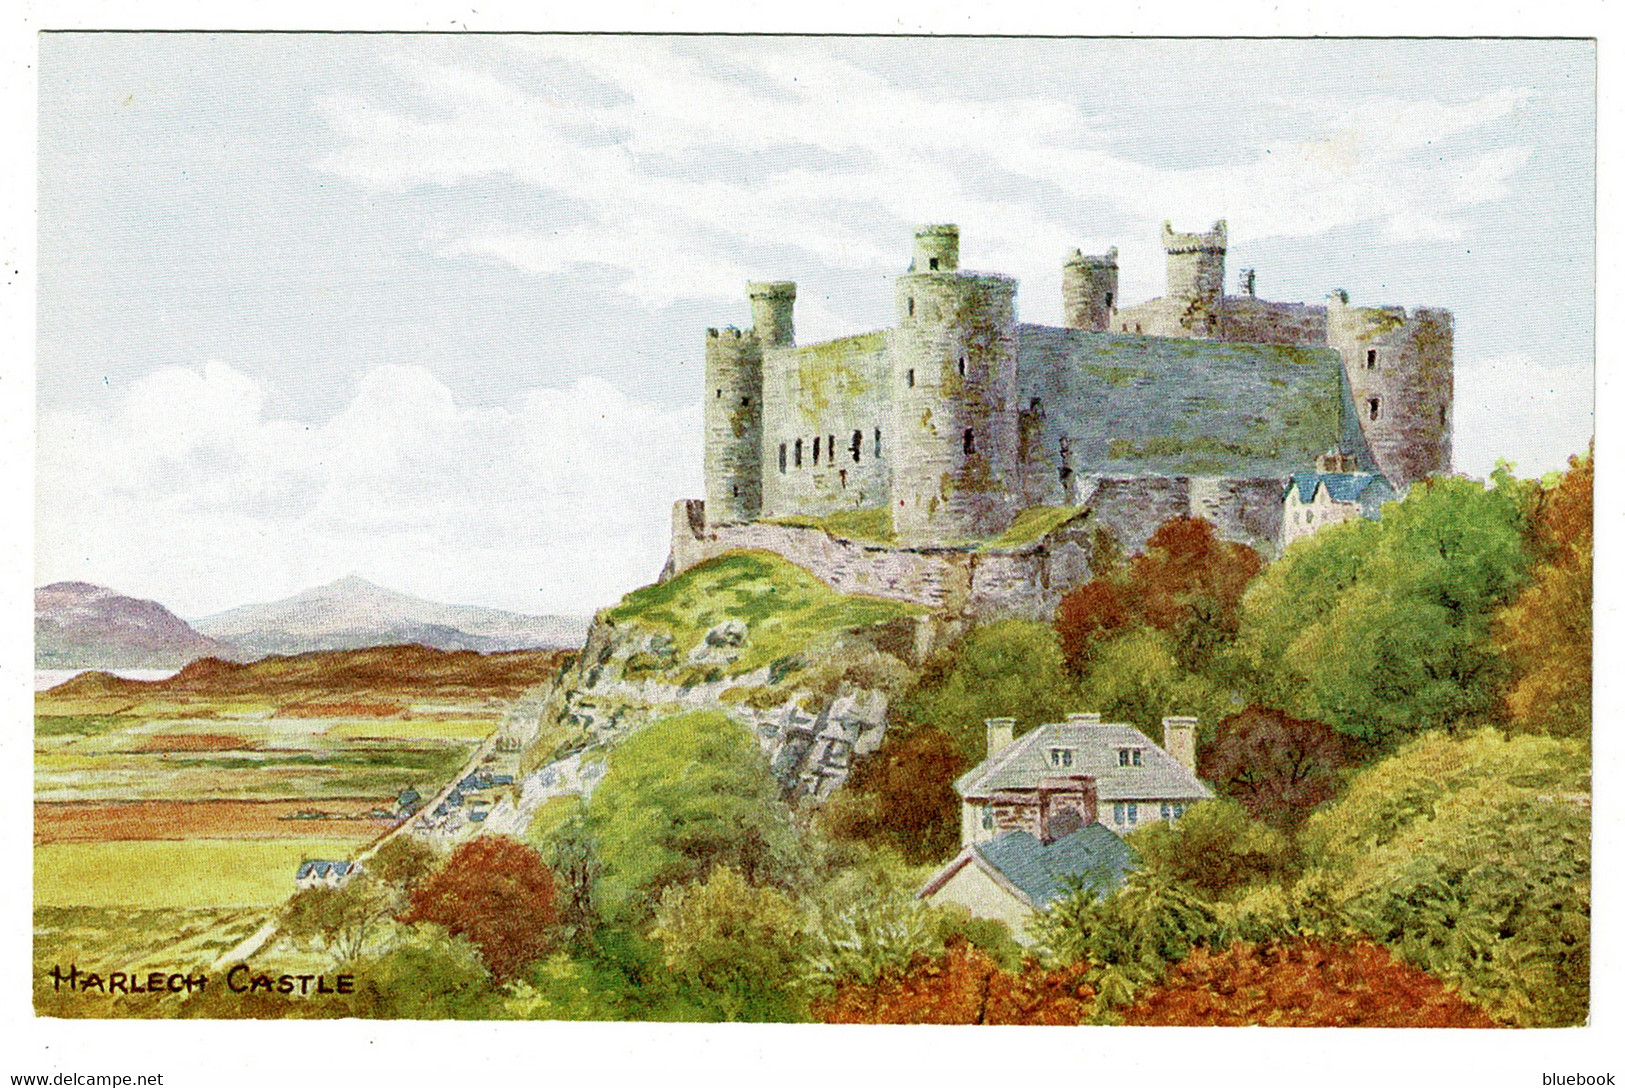 Ref 1533 - J. Salmon Postcard - Harlech Castle - Merionethshire Wales - Merionethshire